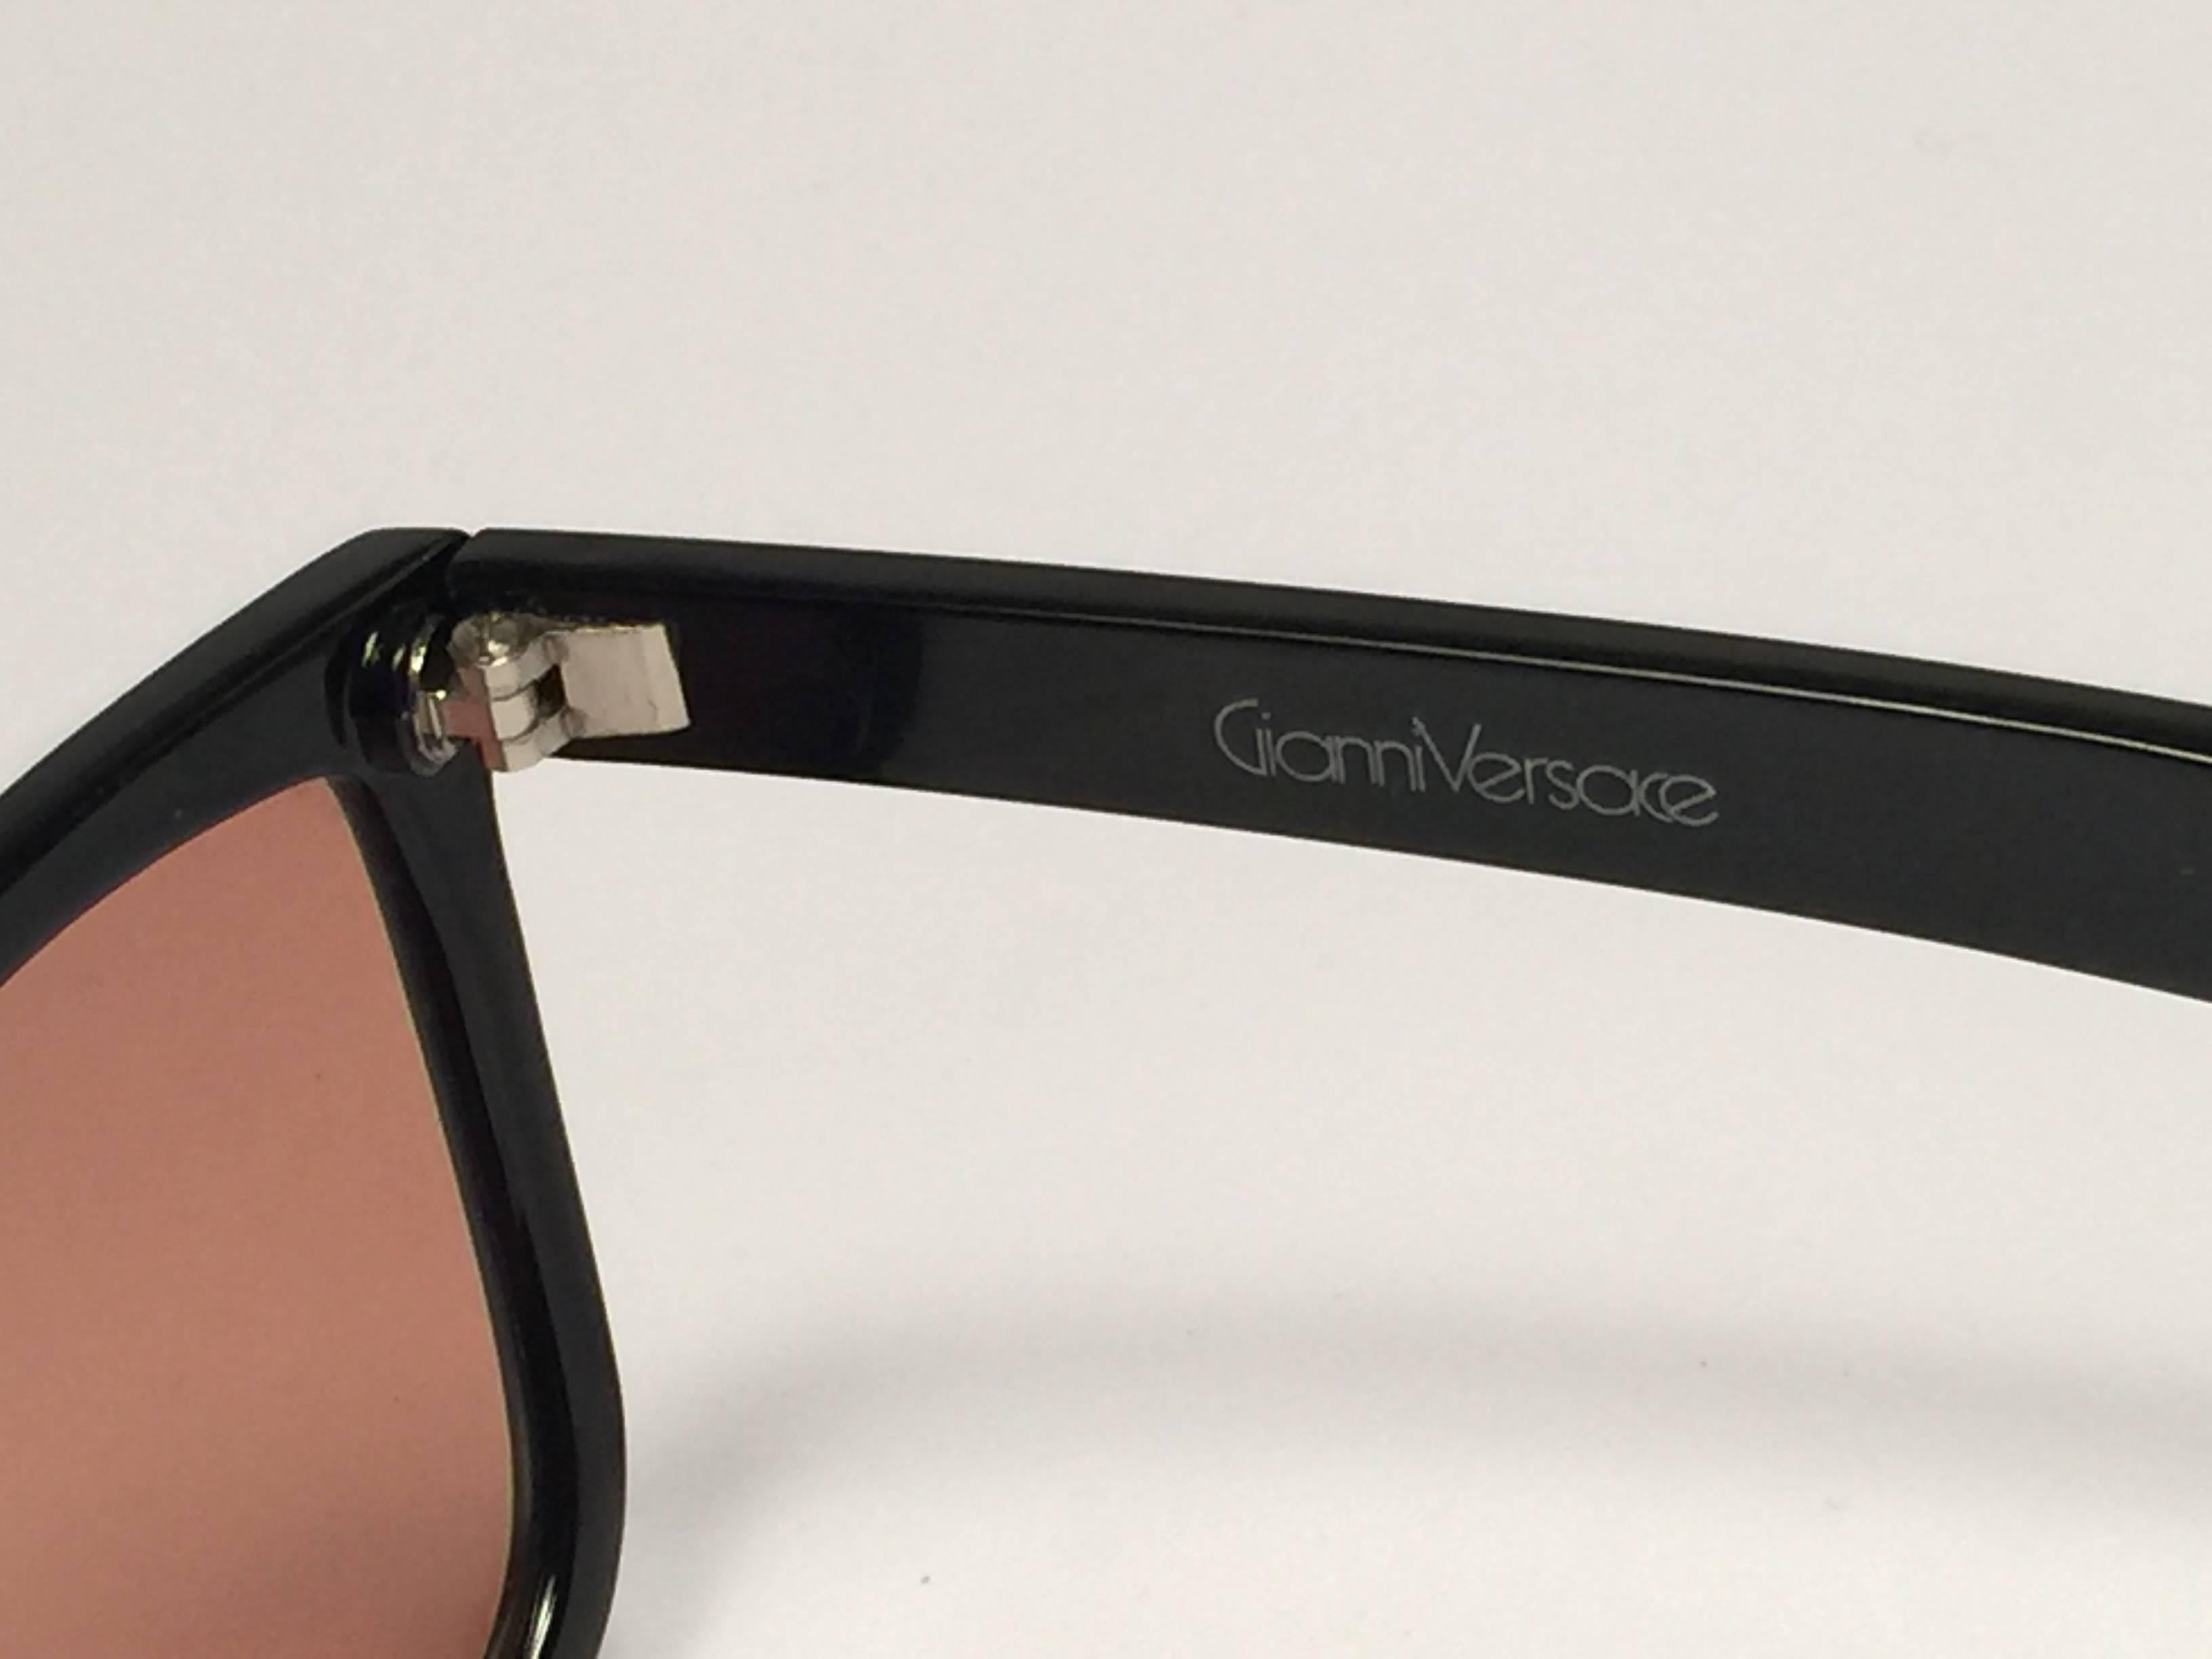 New Vintage Gianni Versace Wayfarer Metrics Sunglasses 1990's Made in Italy 1